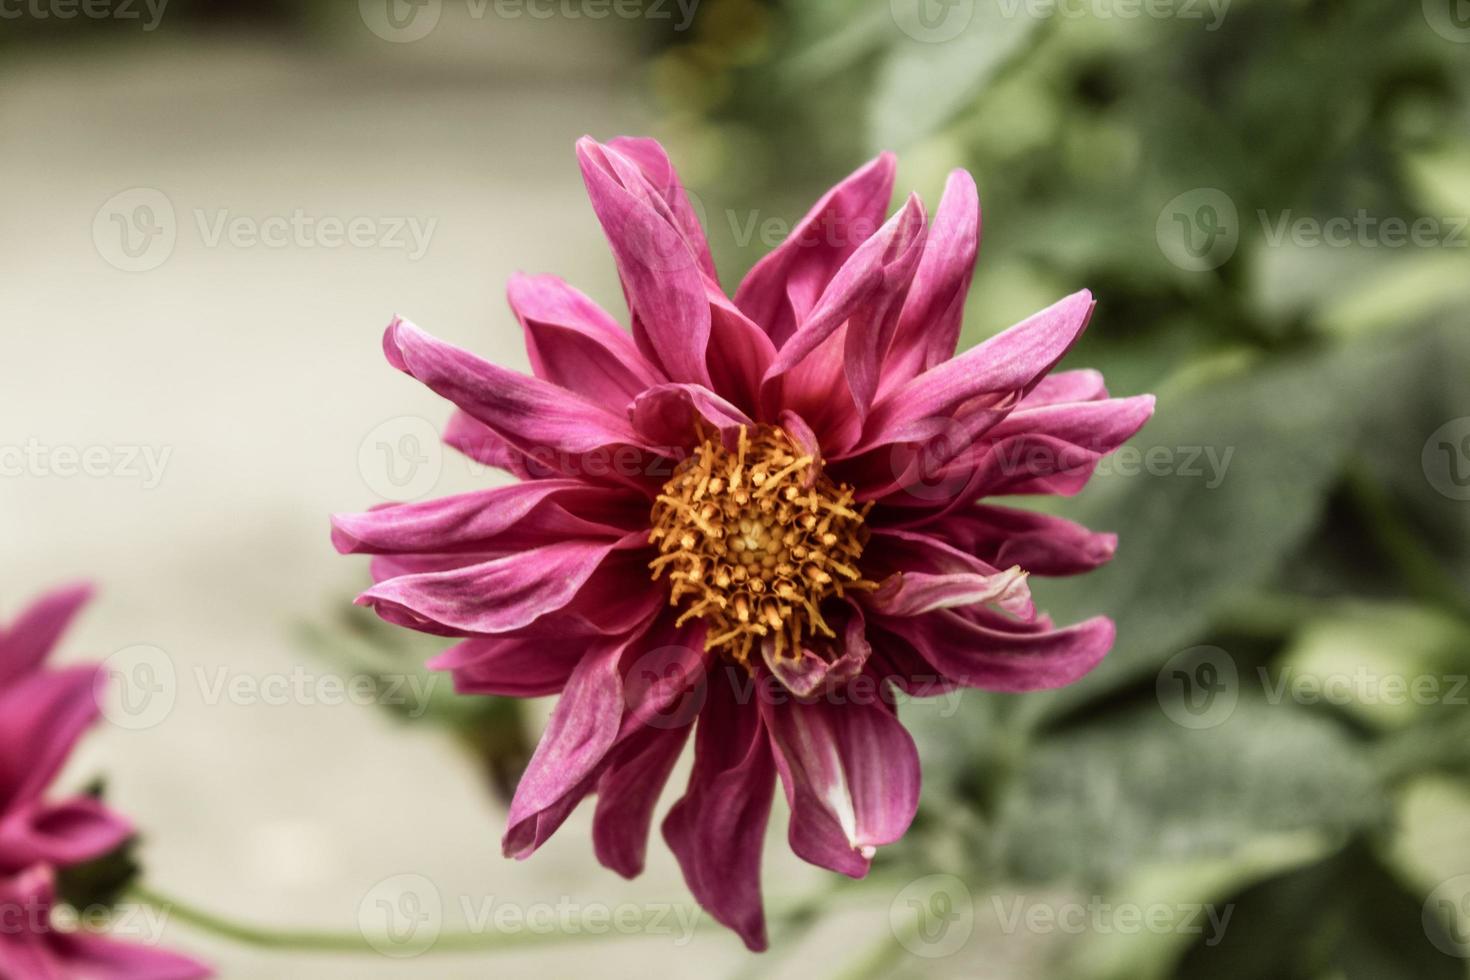 natuurlijke mooie bloem close-up foto